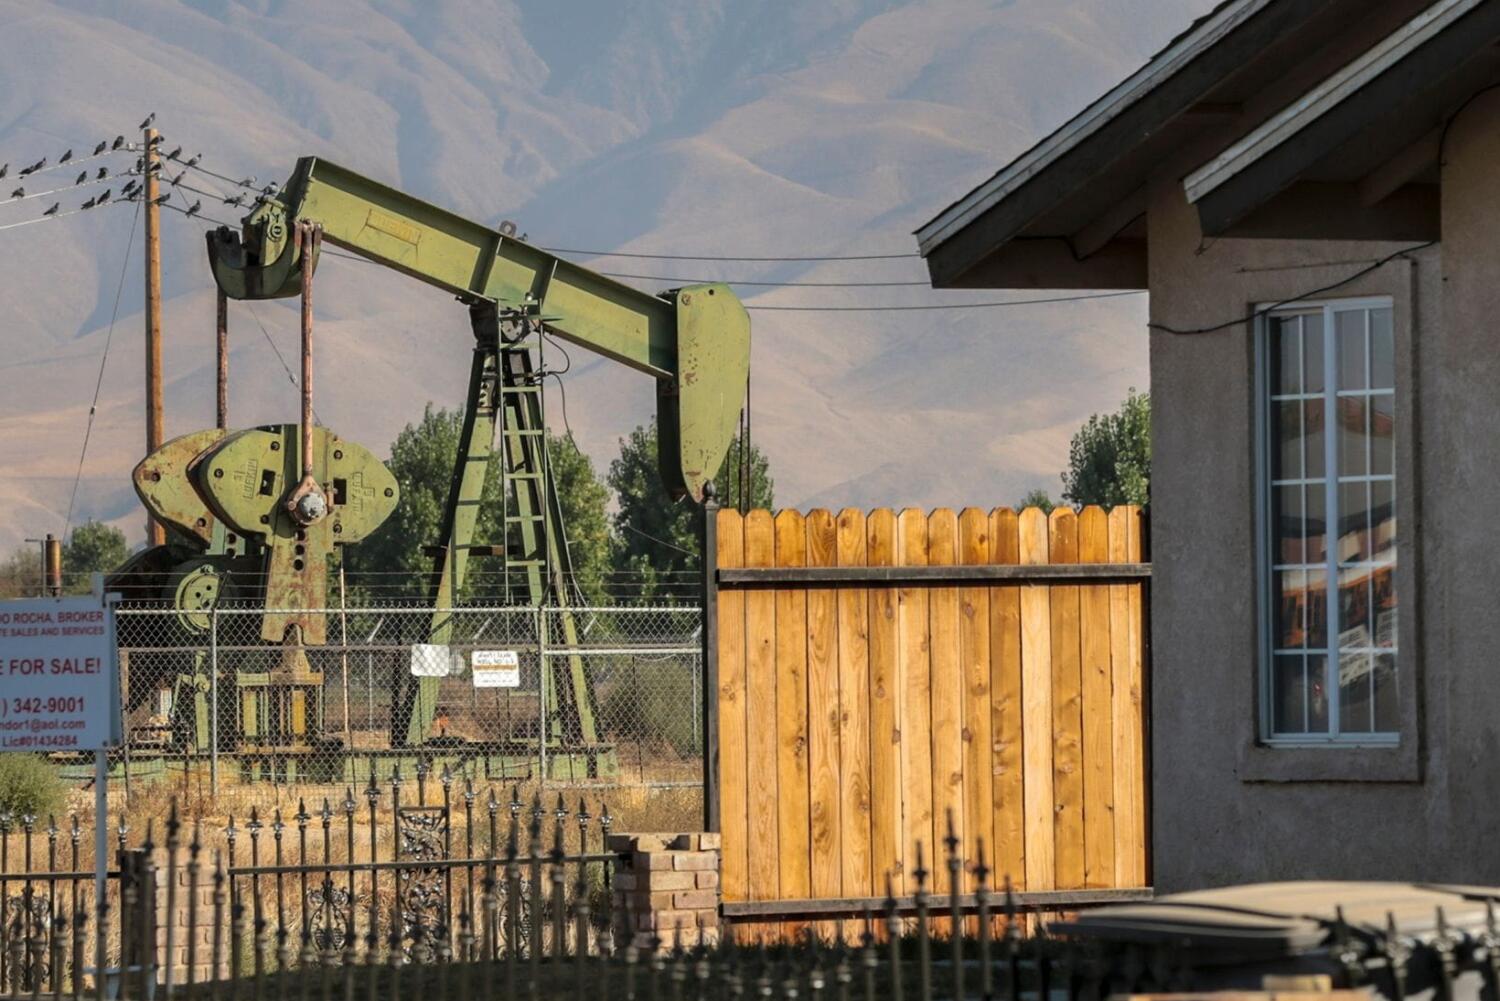 Editorial: Big Oil lost ballot battle, but will still fight to drill near California homes